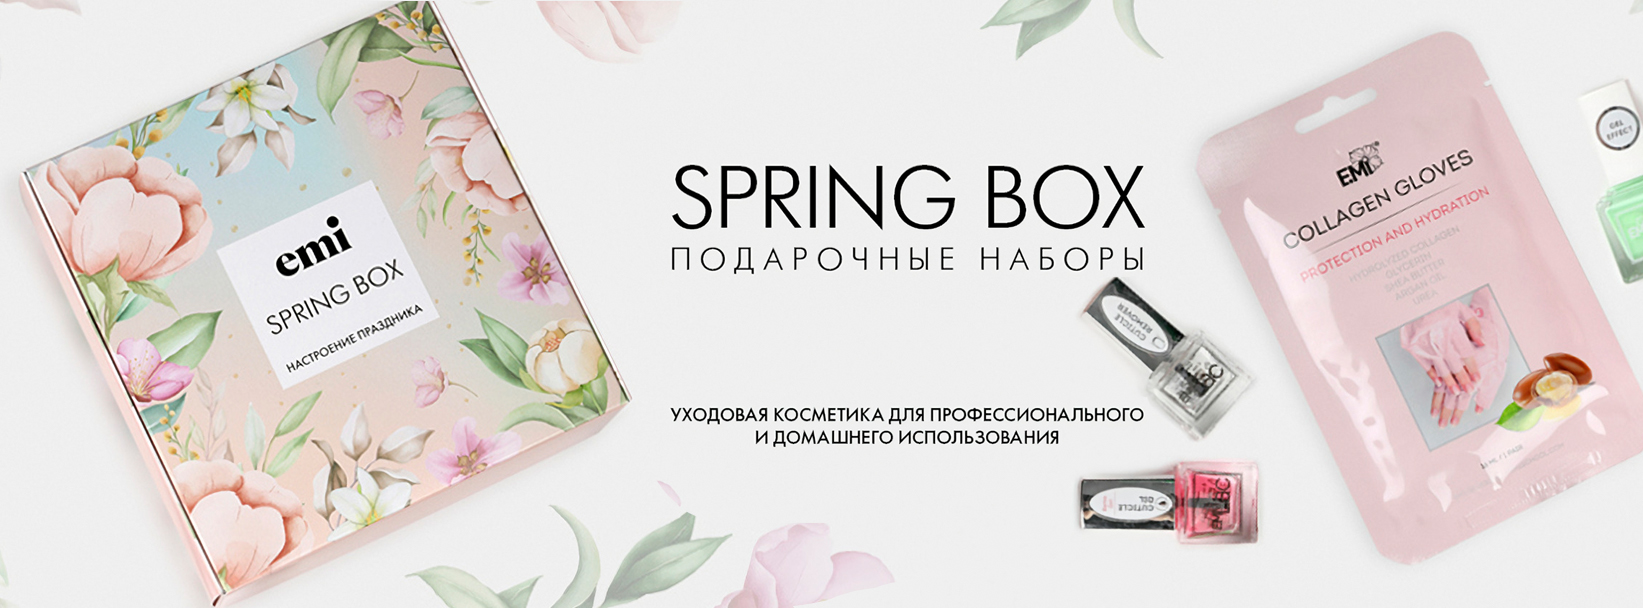 Новинка - Наборы E.Mi Spring Box